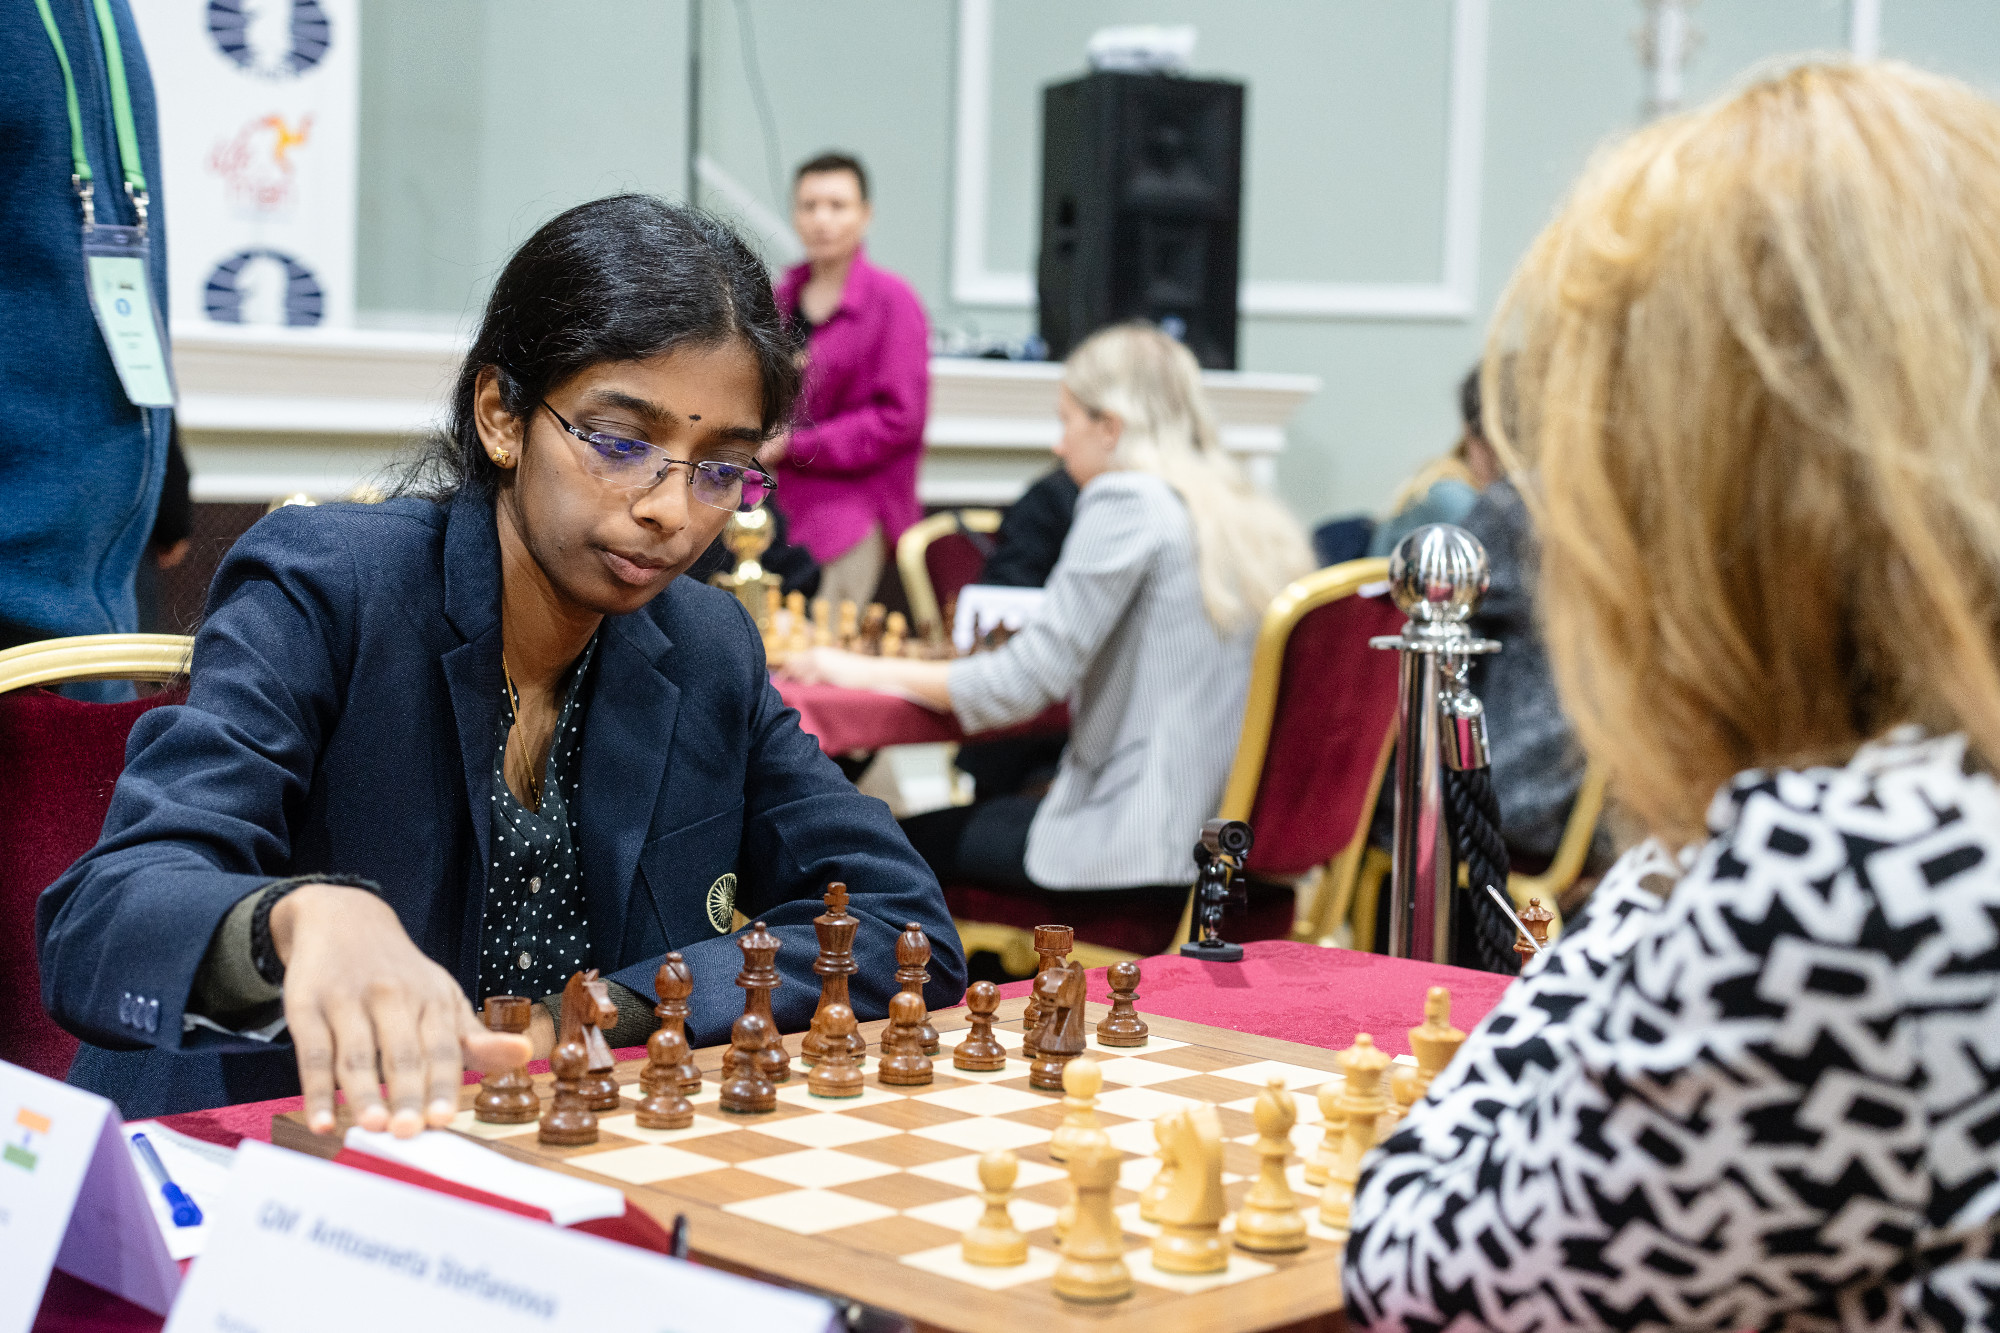 IM Rameshbabu Vaishali wins the 2023 FIDE Women's Grand Swiss with an  unbeaten 8.5 points : r/chess